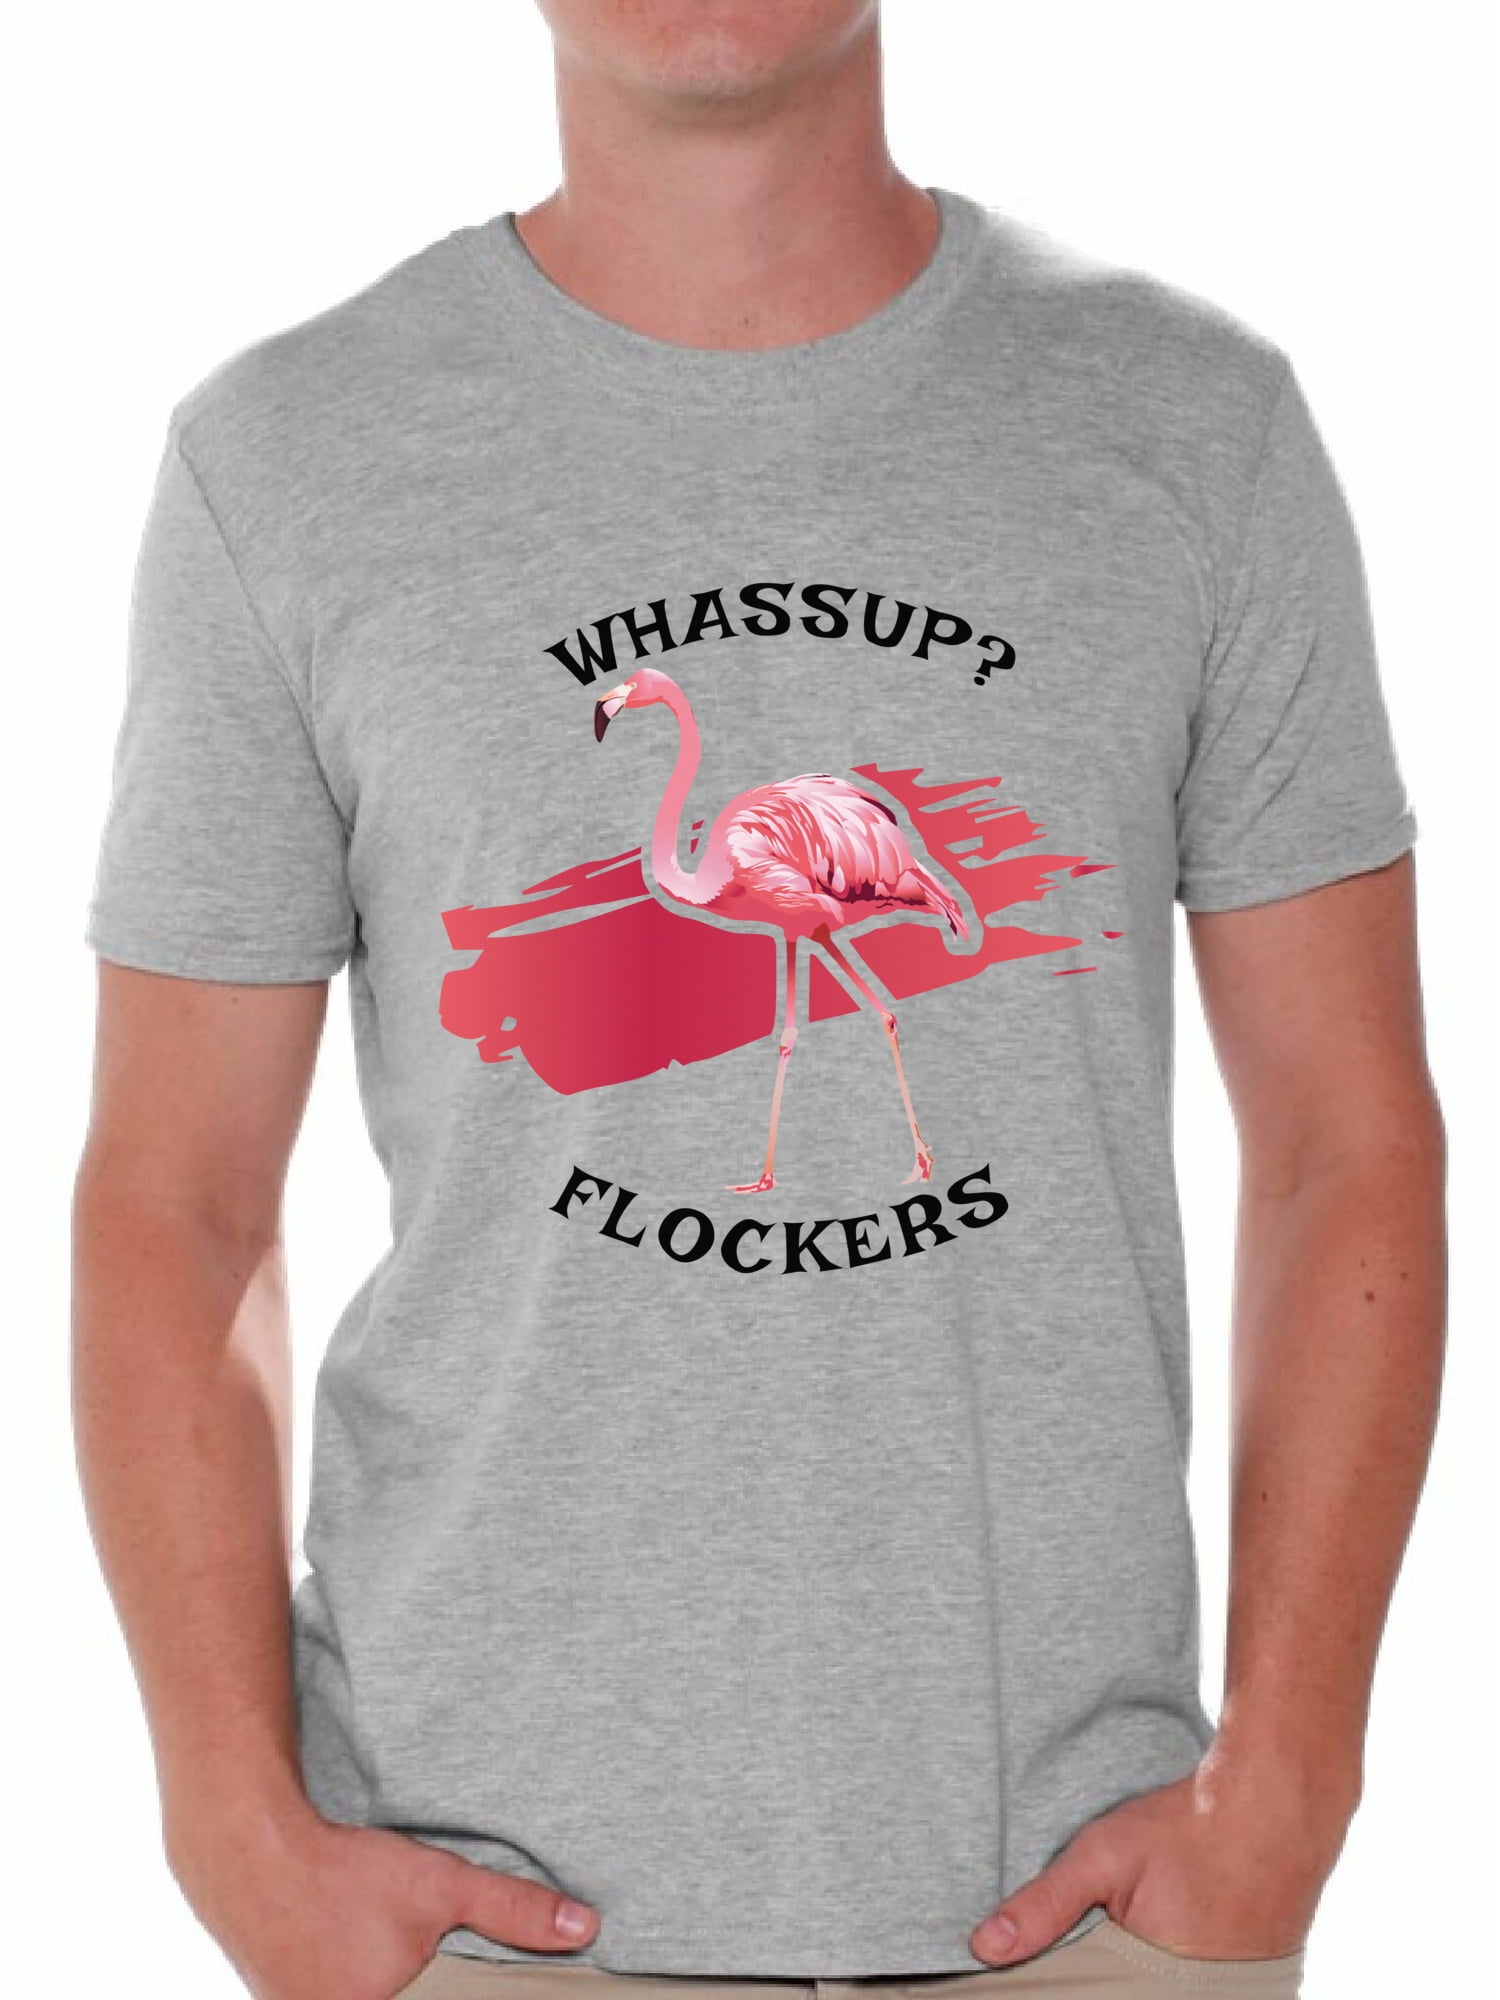 Awkward Styles - Awkward Styles Whassup Flockers Tshirt for Men Pink Flamingo Shirt Flamingo ...